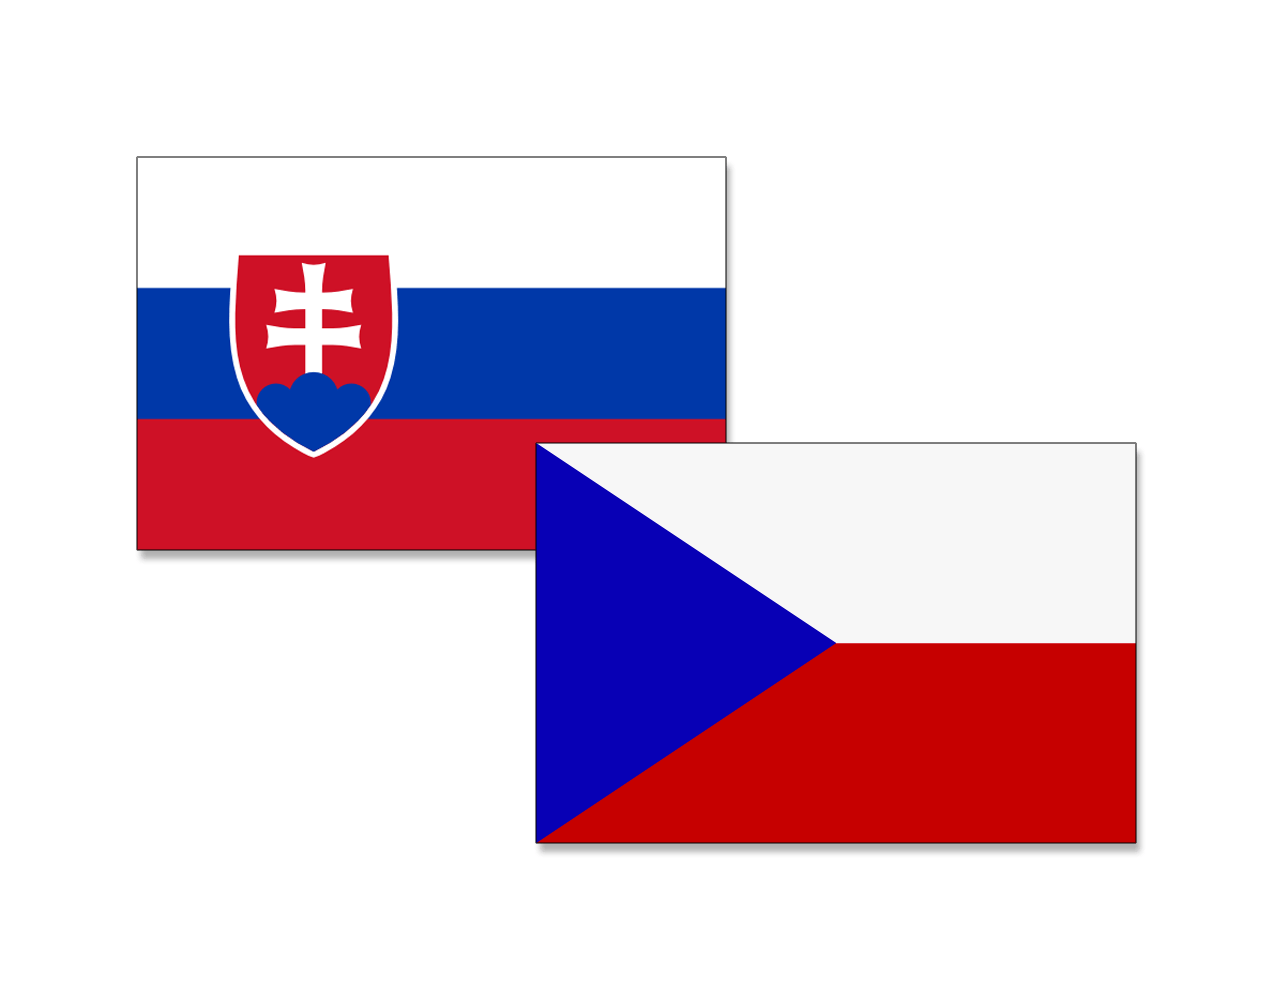 Vlajky Slovenska a Česka